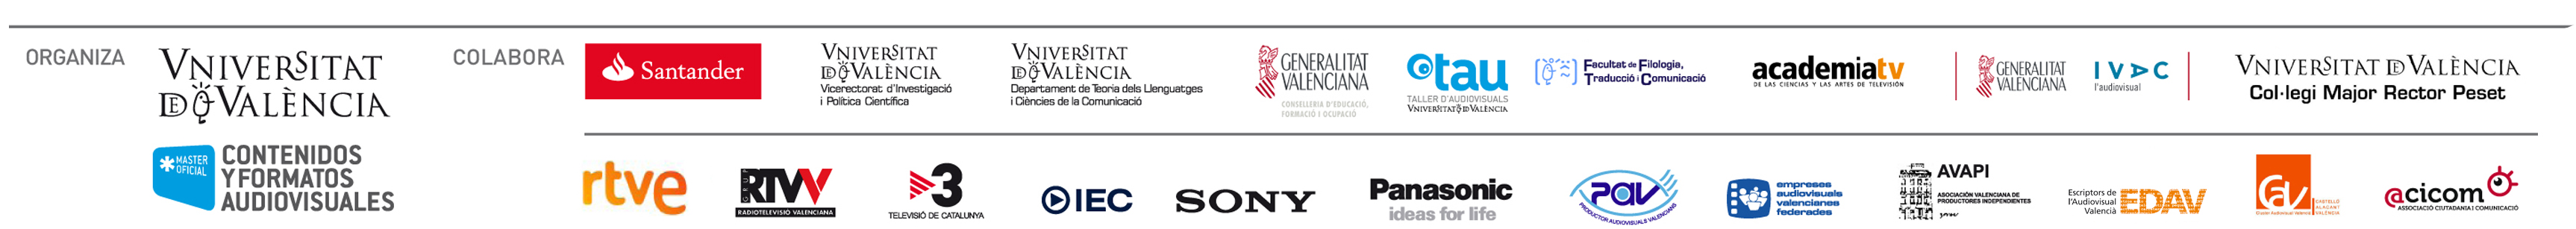 http://www.uv.es/contd/newsletter/imagenes/logos.jpg